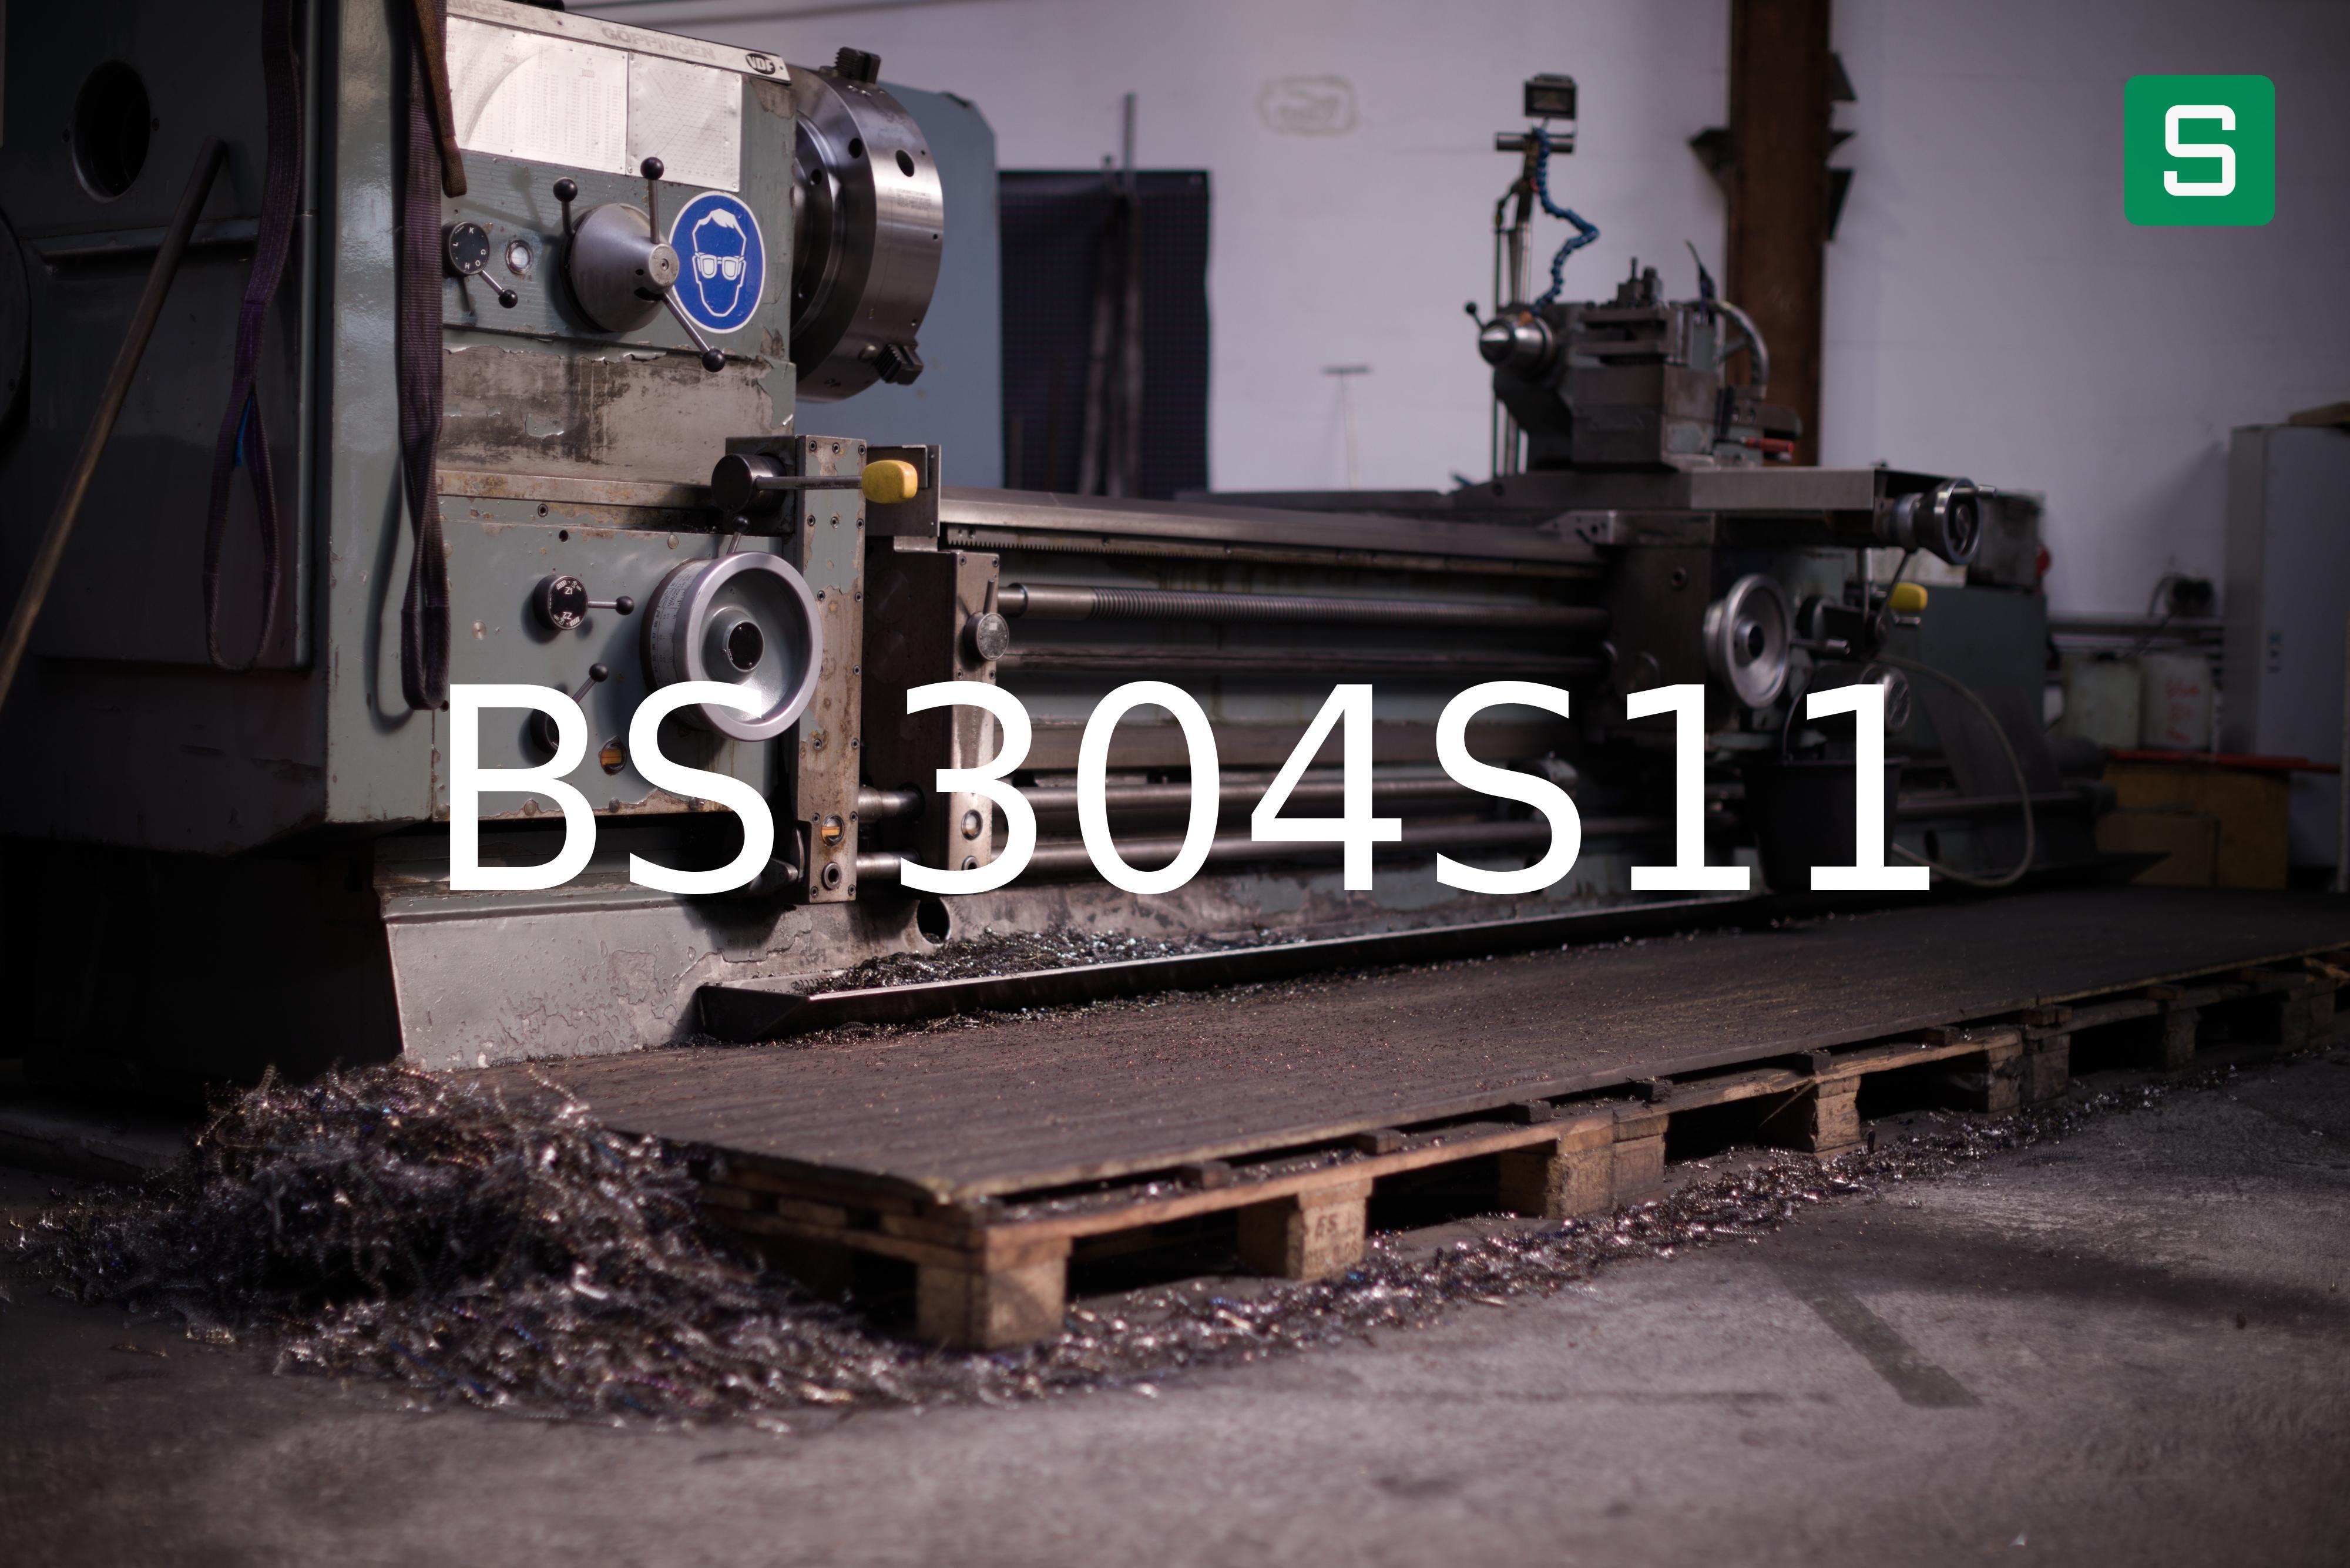 Steel Material: BS 304S11